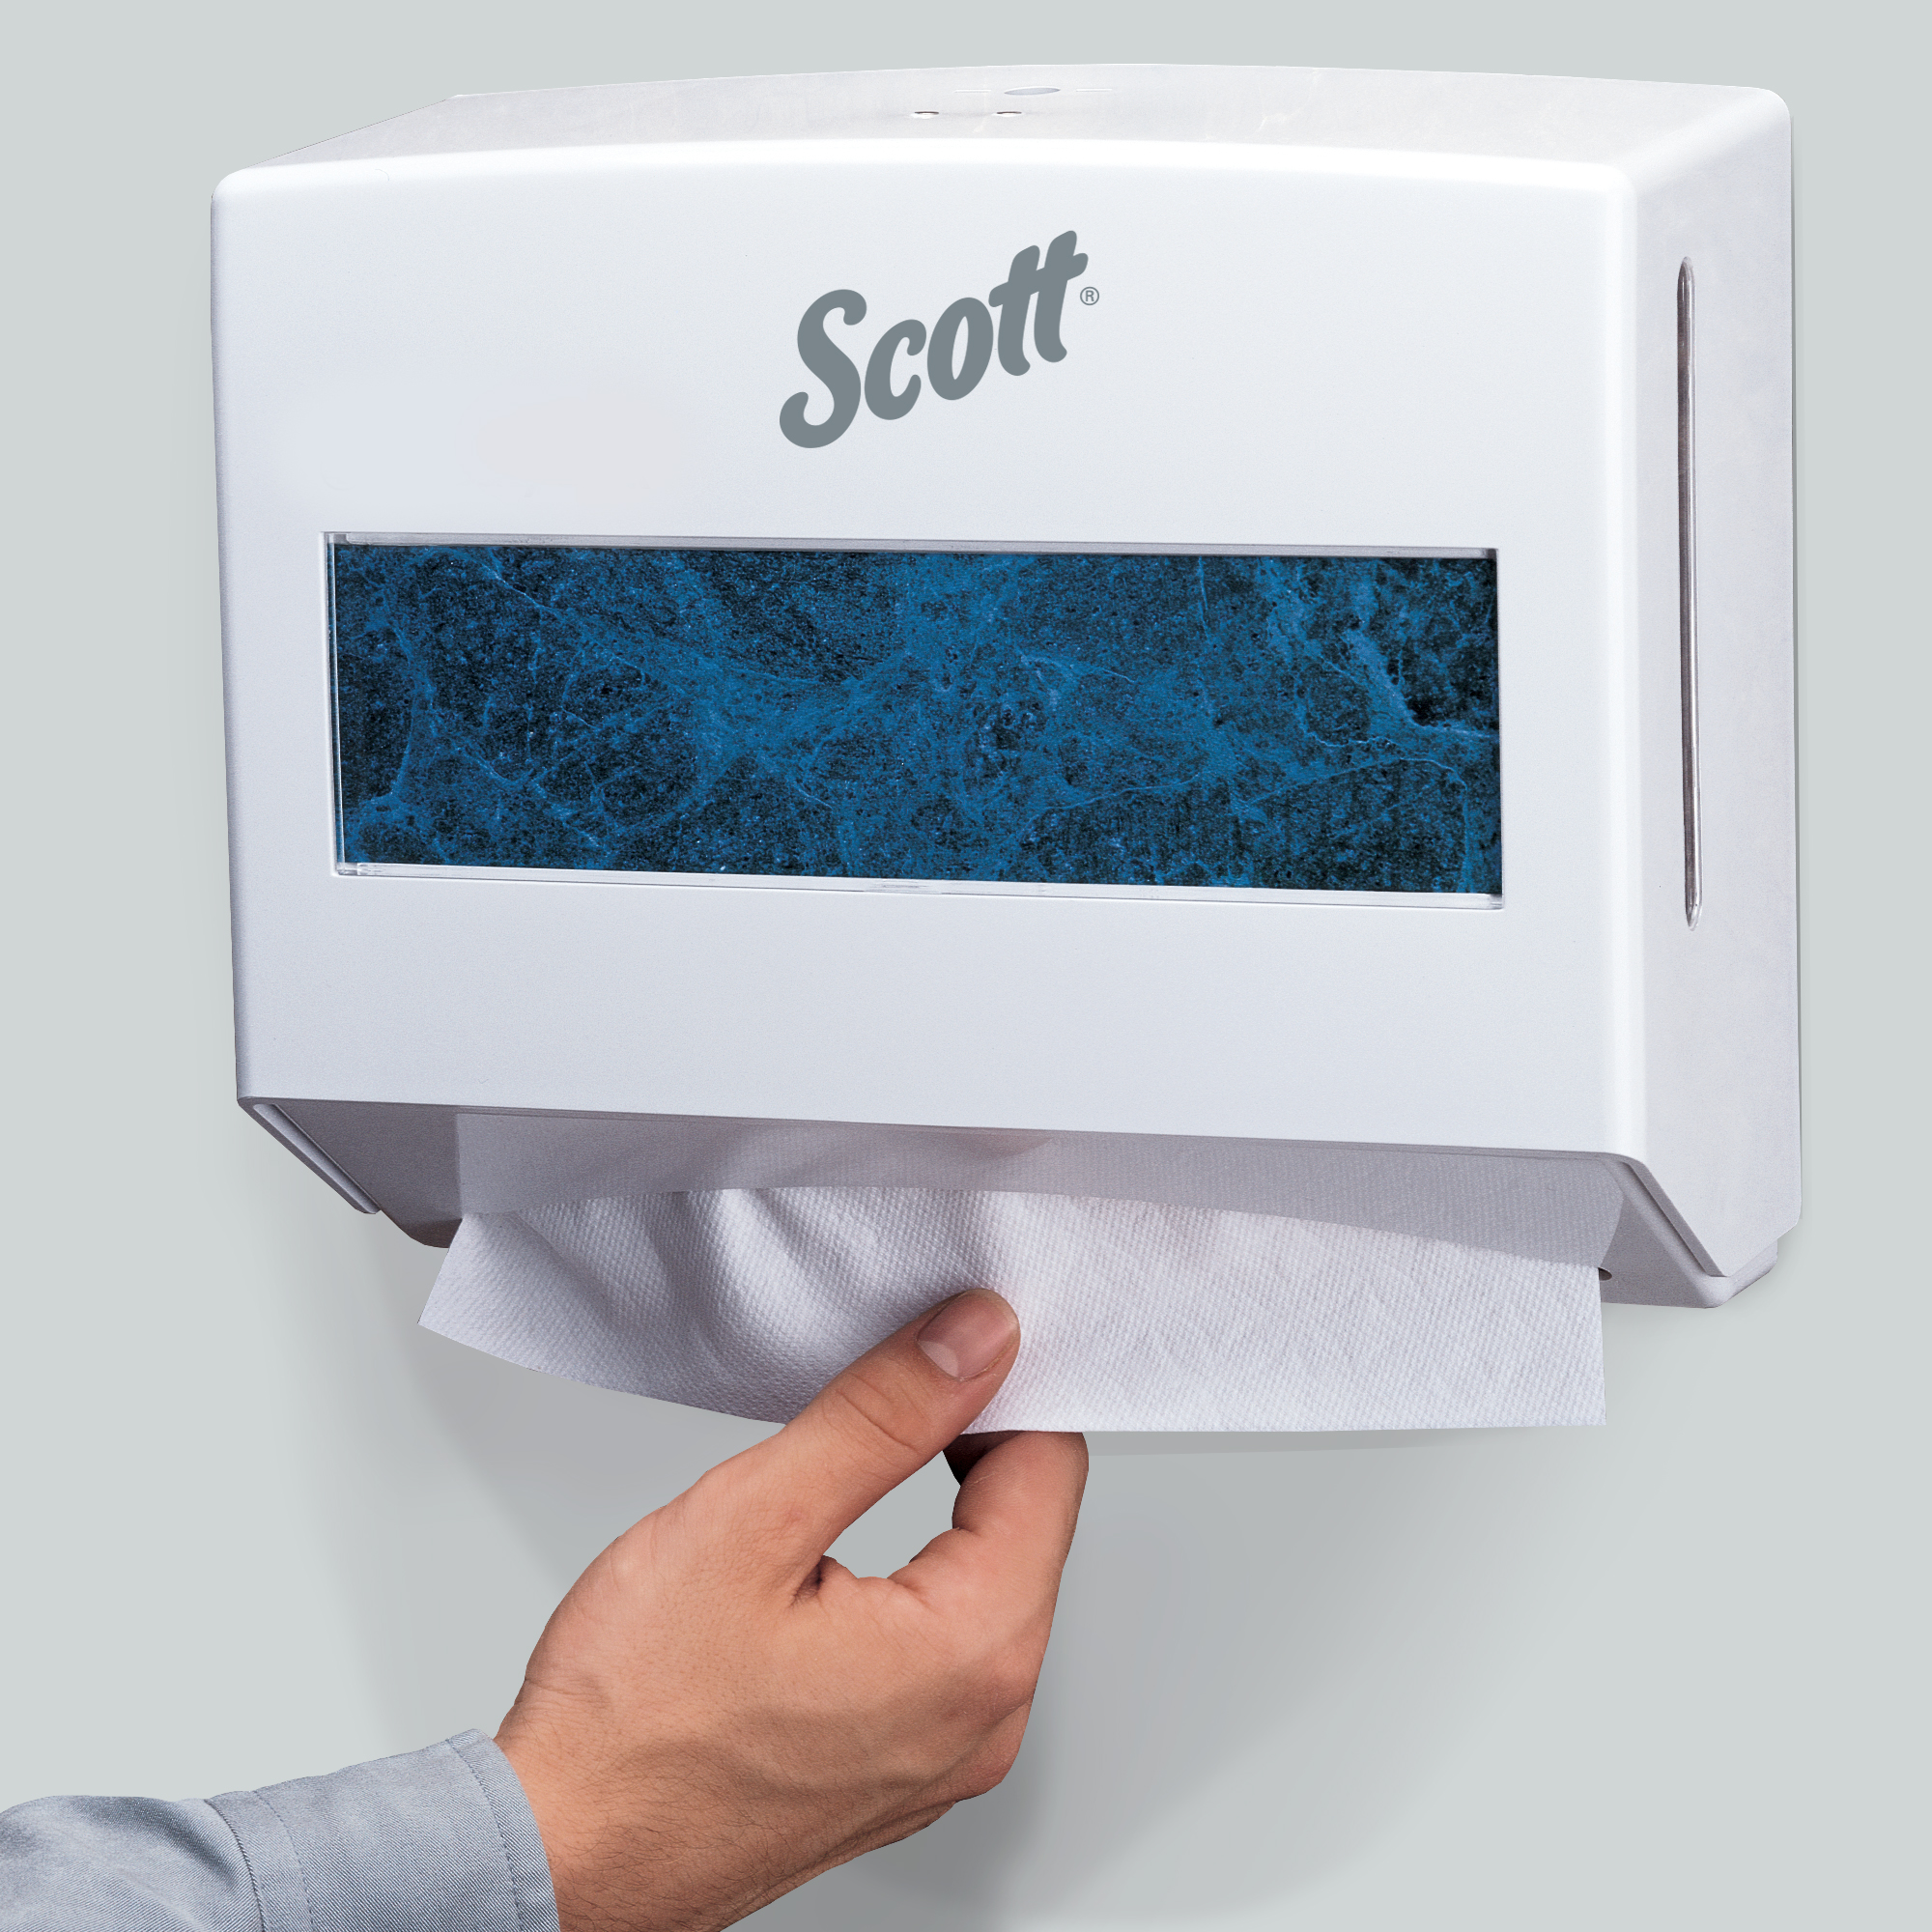 Picture of Scottfold Compact Towel Dispenser, 10 3/4w x 4 3/4d x 9h, White